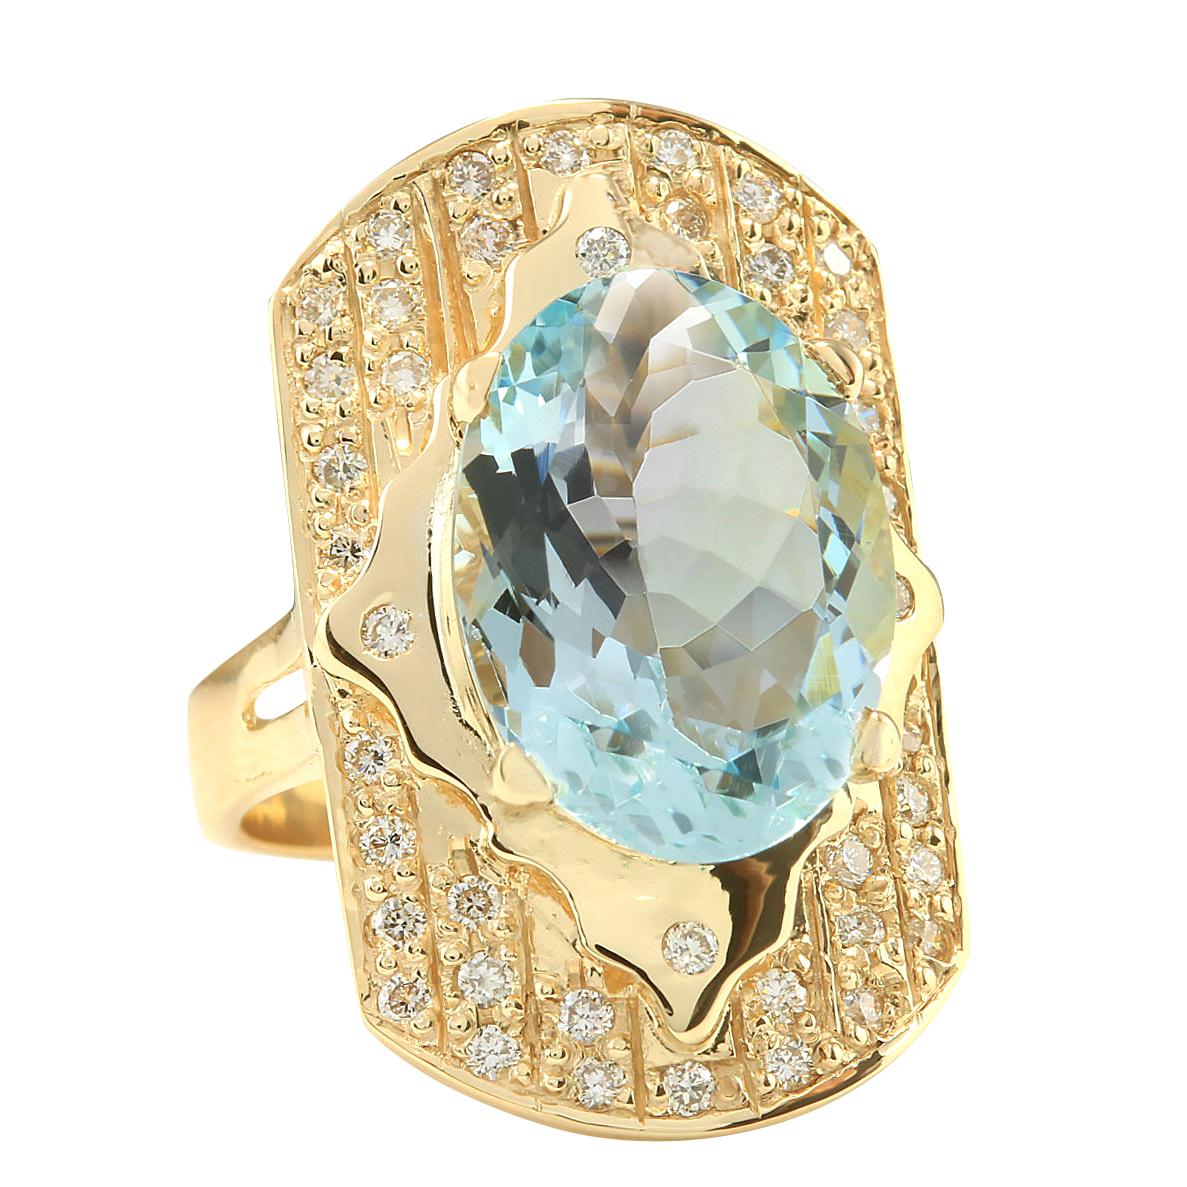 7.35 Carat Natural Aquamarine 14 Karat Yellow Gold Diamond Ring
Stamped: 14K Yellow Gold
Total Ring Weight: 8.7 Grams
Total Natural Aquamarine Weight is 6.80 Carat (Measures: 15.00x11.00 mm)
Color: Blue
Total Natural Diamond Weight is 0.55